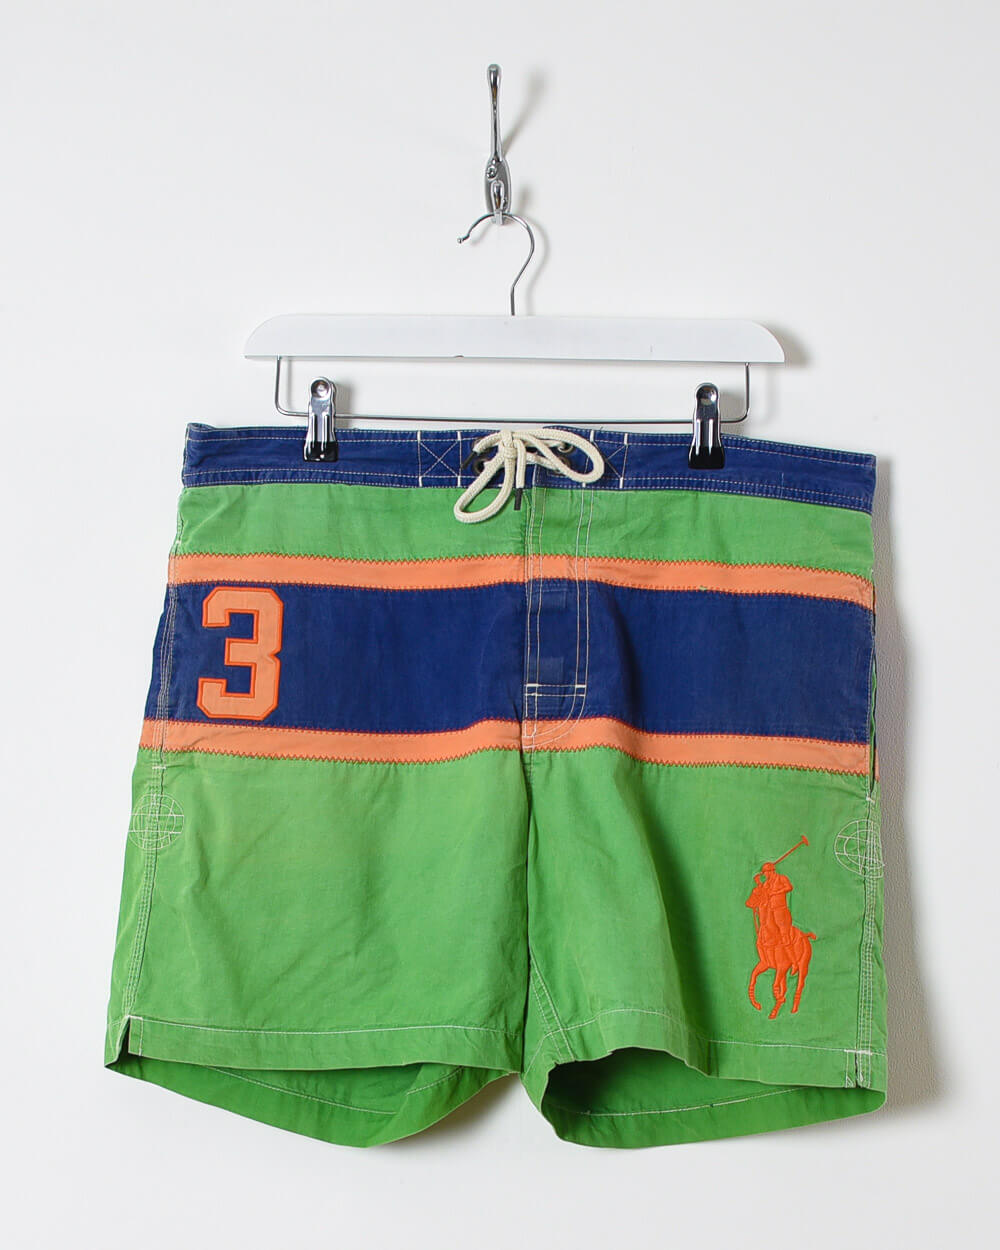 Ralph Lauren Swimwear Shorts - W36 - Domno Vintage 90s, 80s, 00s Retro and Vintage Clothing 